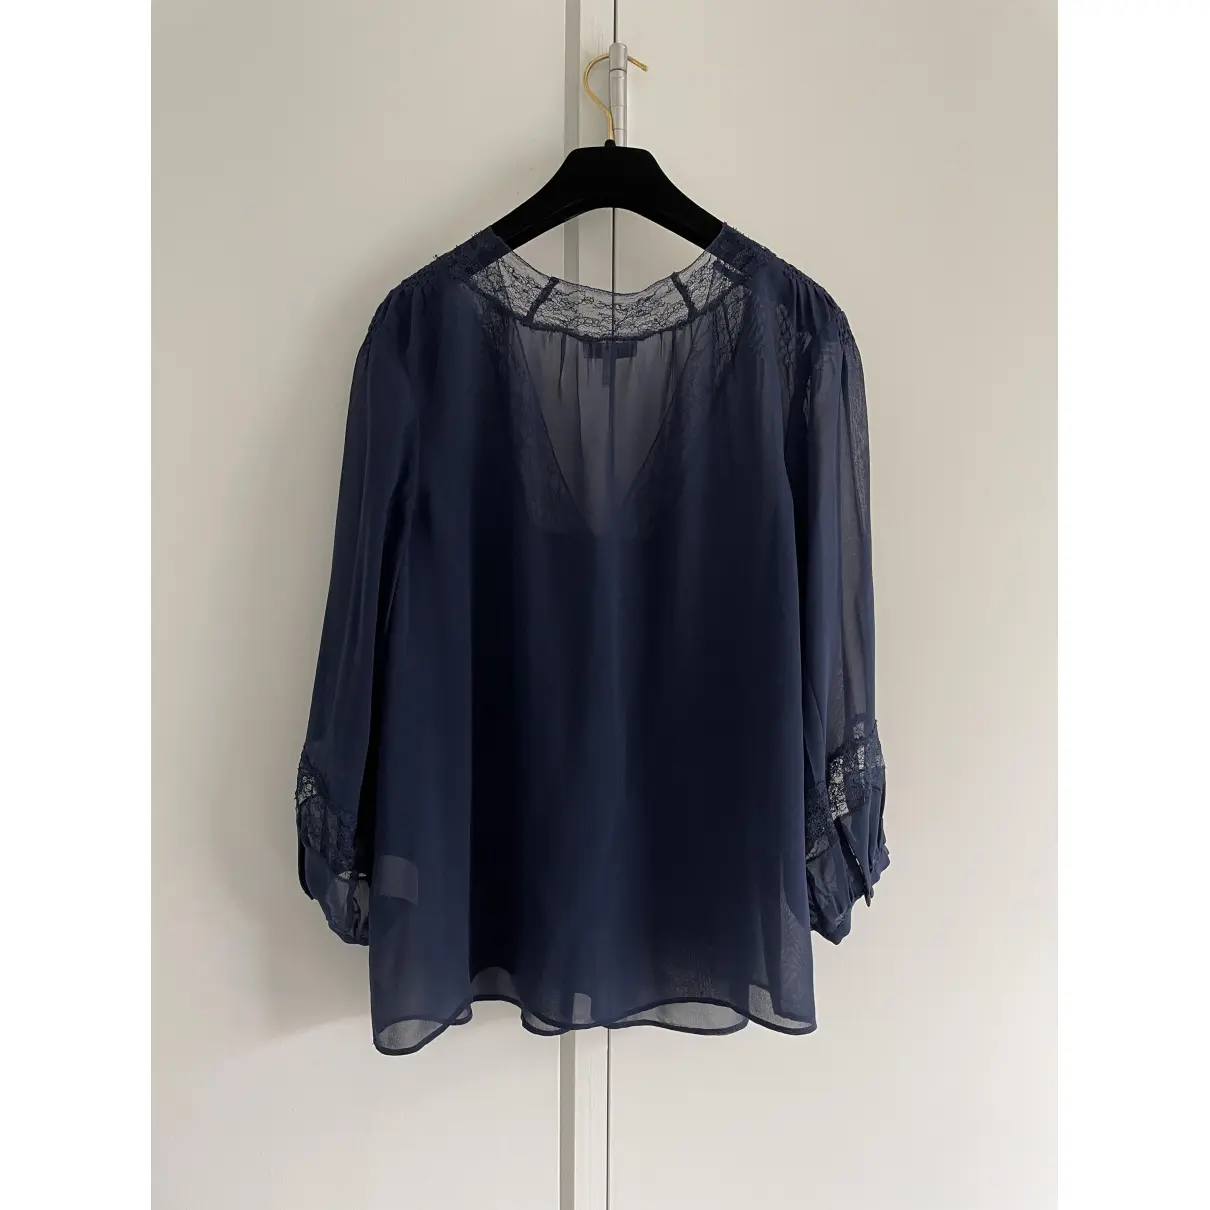 Buy Joie Silk blouse online